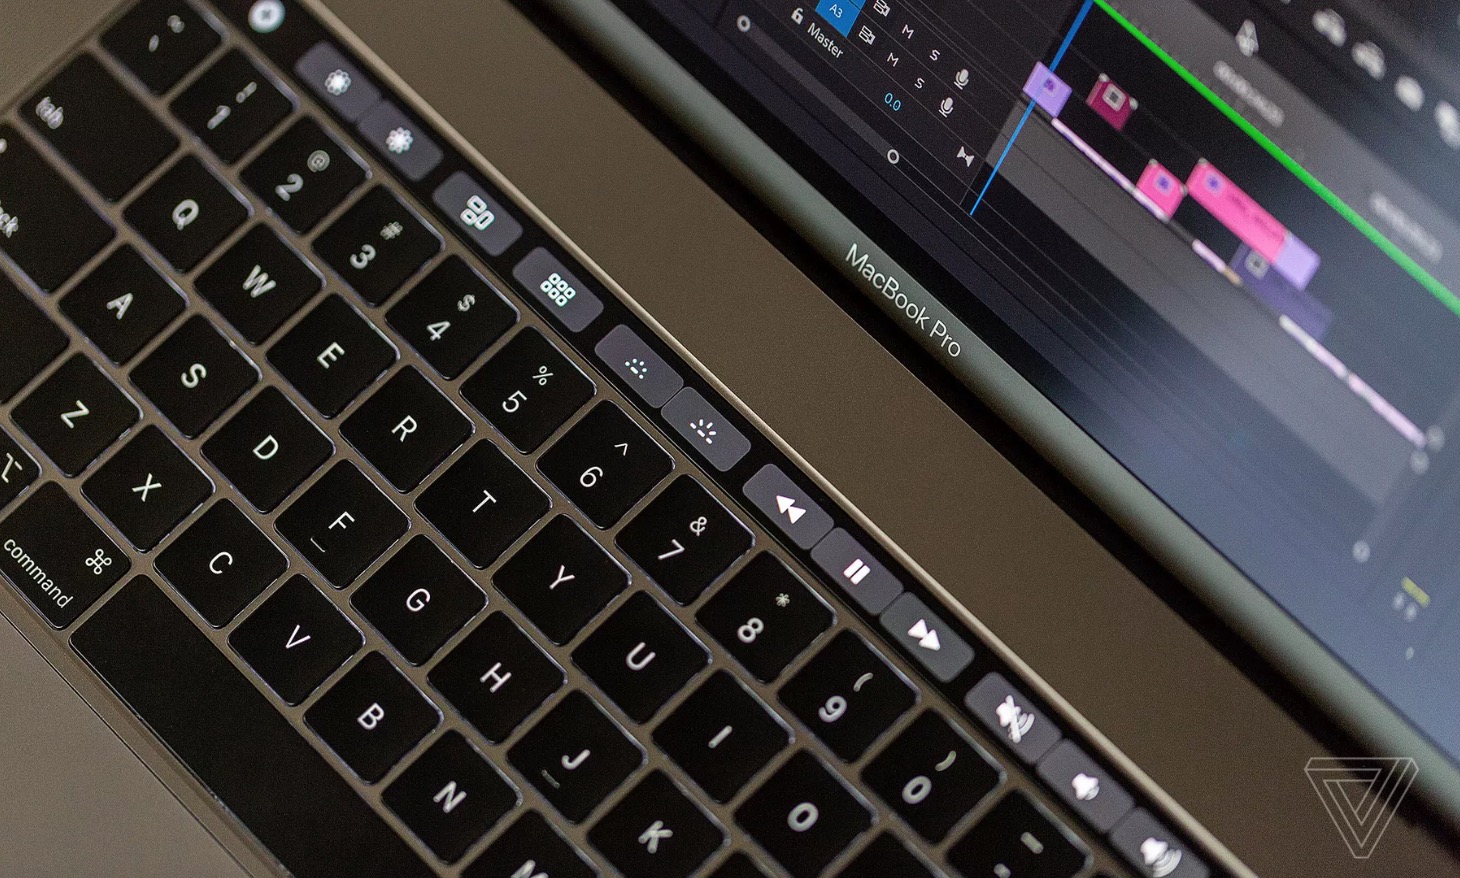 Apple nâng cấp dòng
MacBook Pro 13 inch và MacBook Air, khai tử MacBook 12 inch